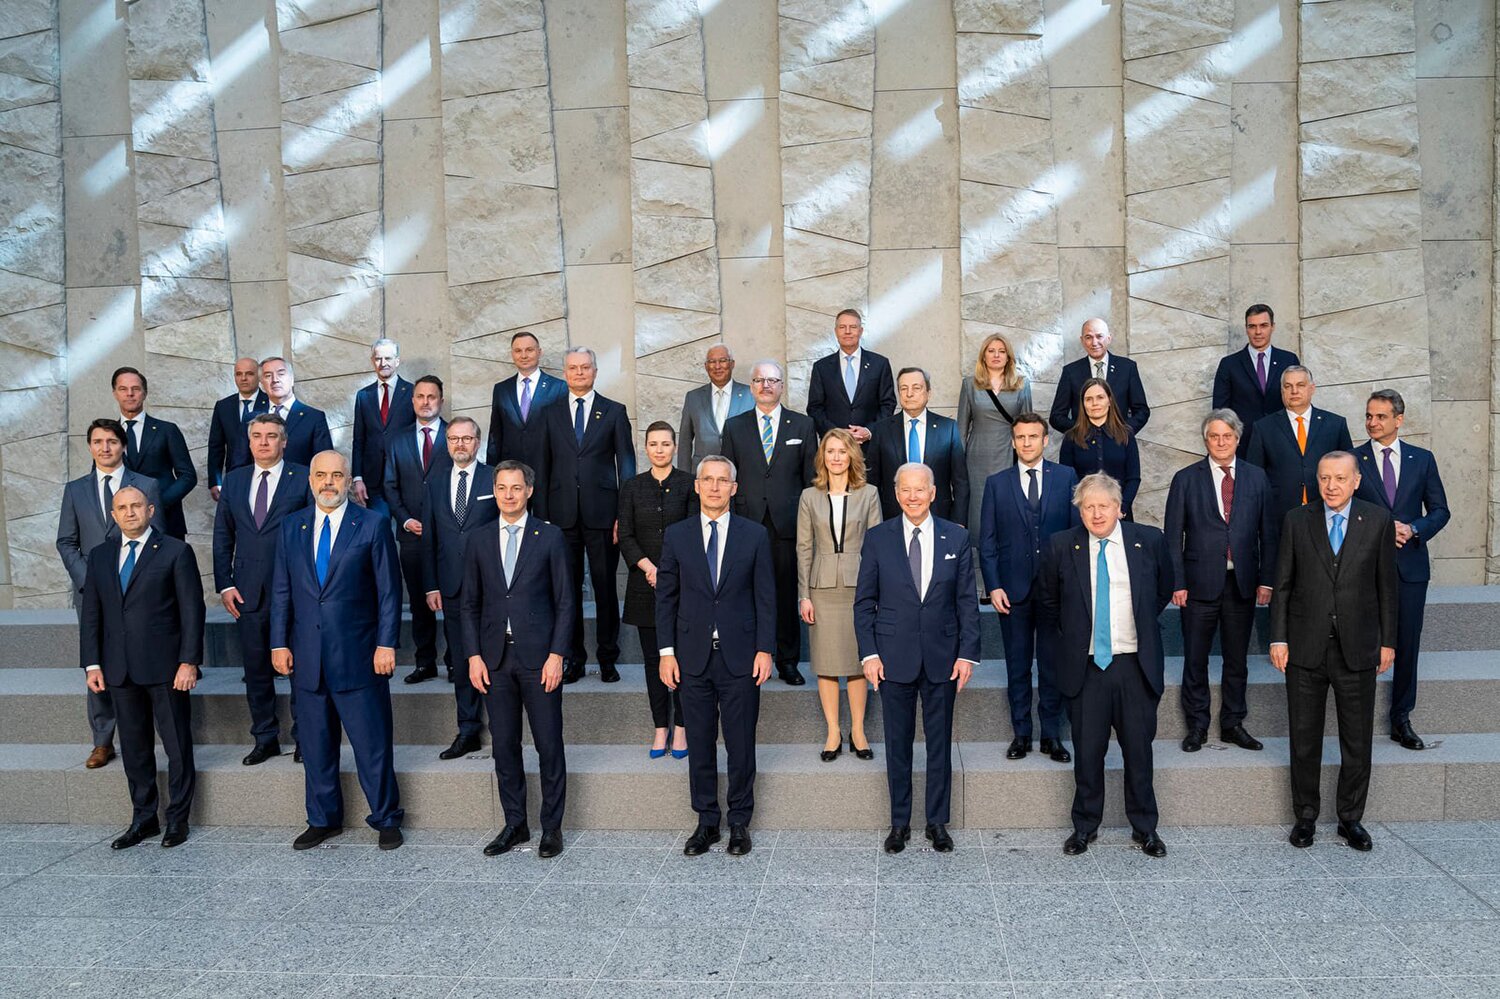 NATO-Leaders-Meet-In-Brussels-Belgium-One-Month-After-Russia-Invasion-Of-Ukraine.jpg